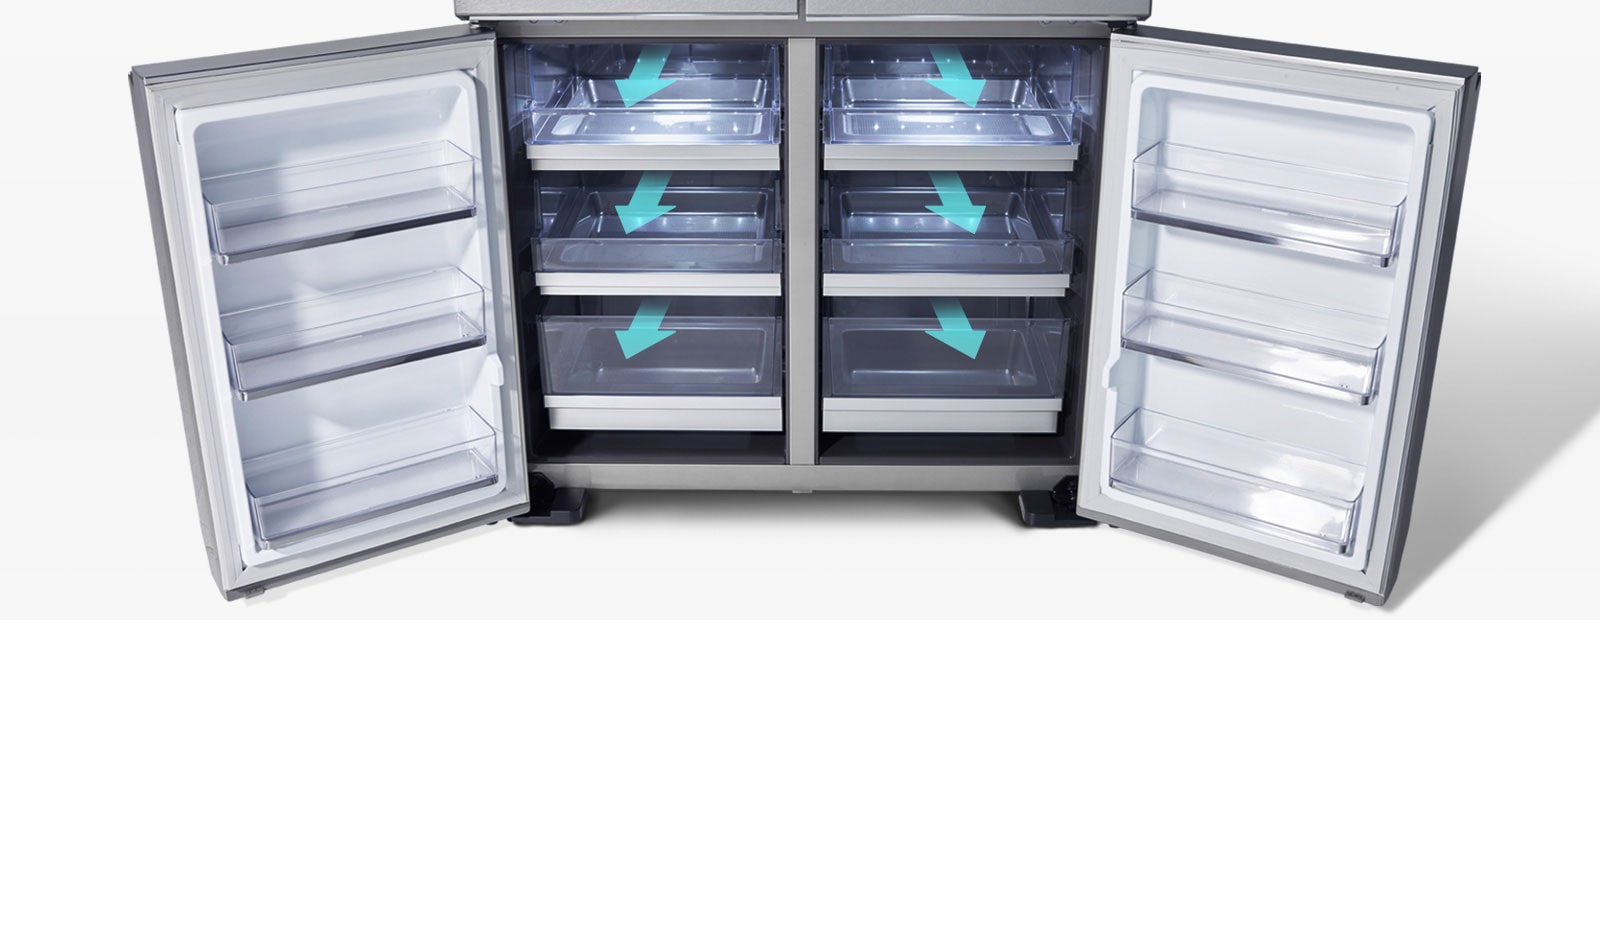 Refrigerator showcasing auto open freezer drawers